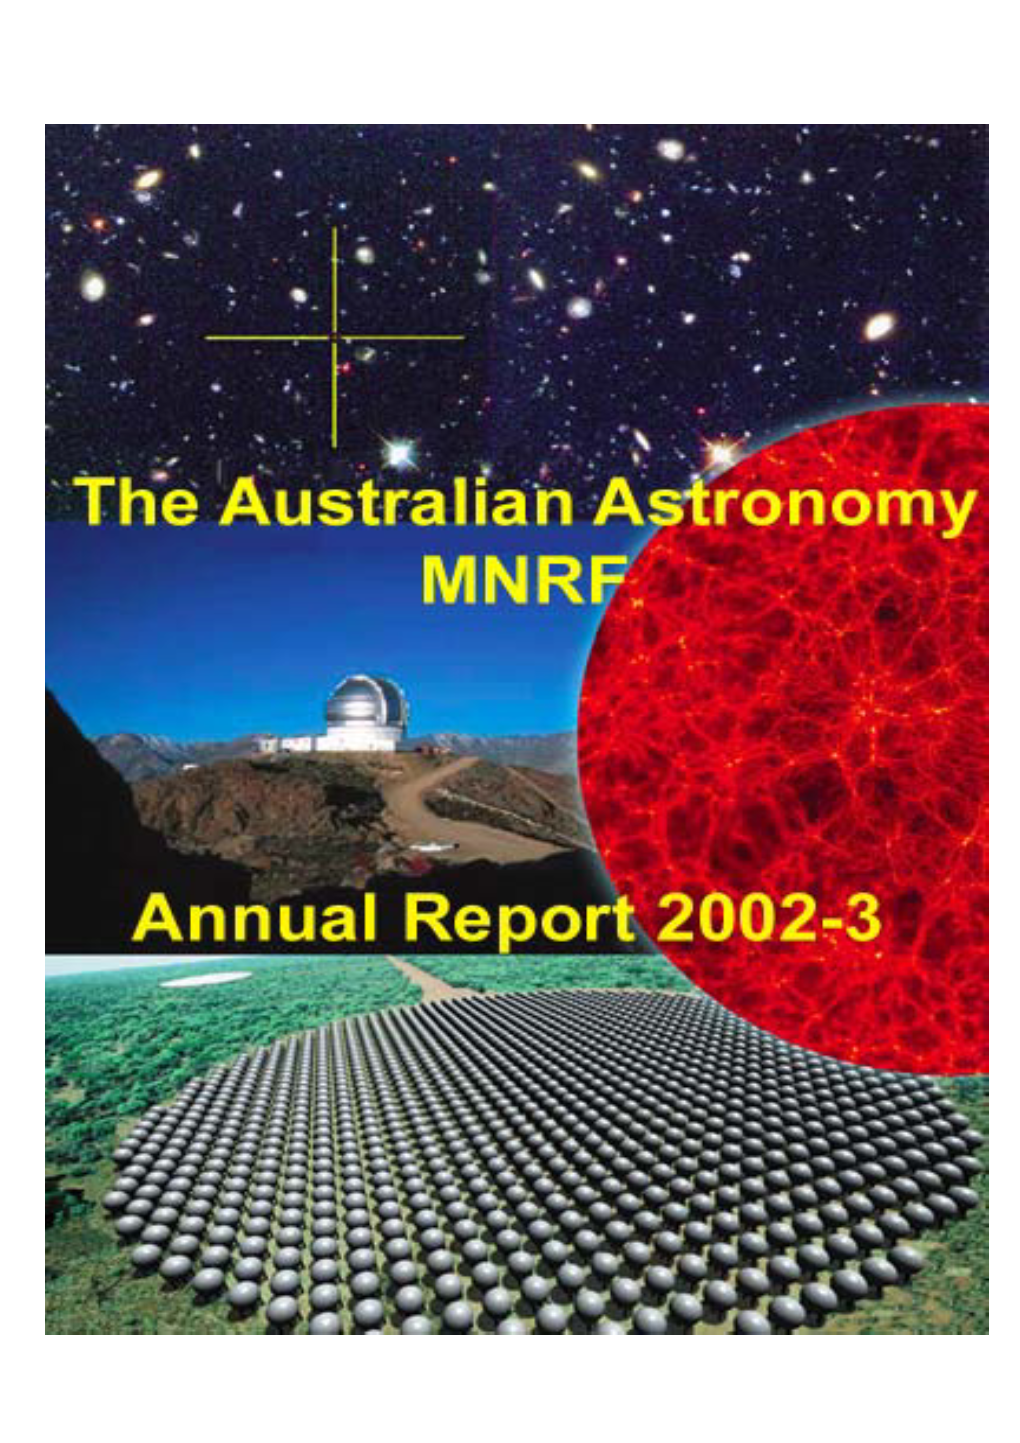 2002/2003 MNRF Annual Report